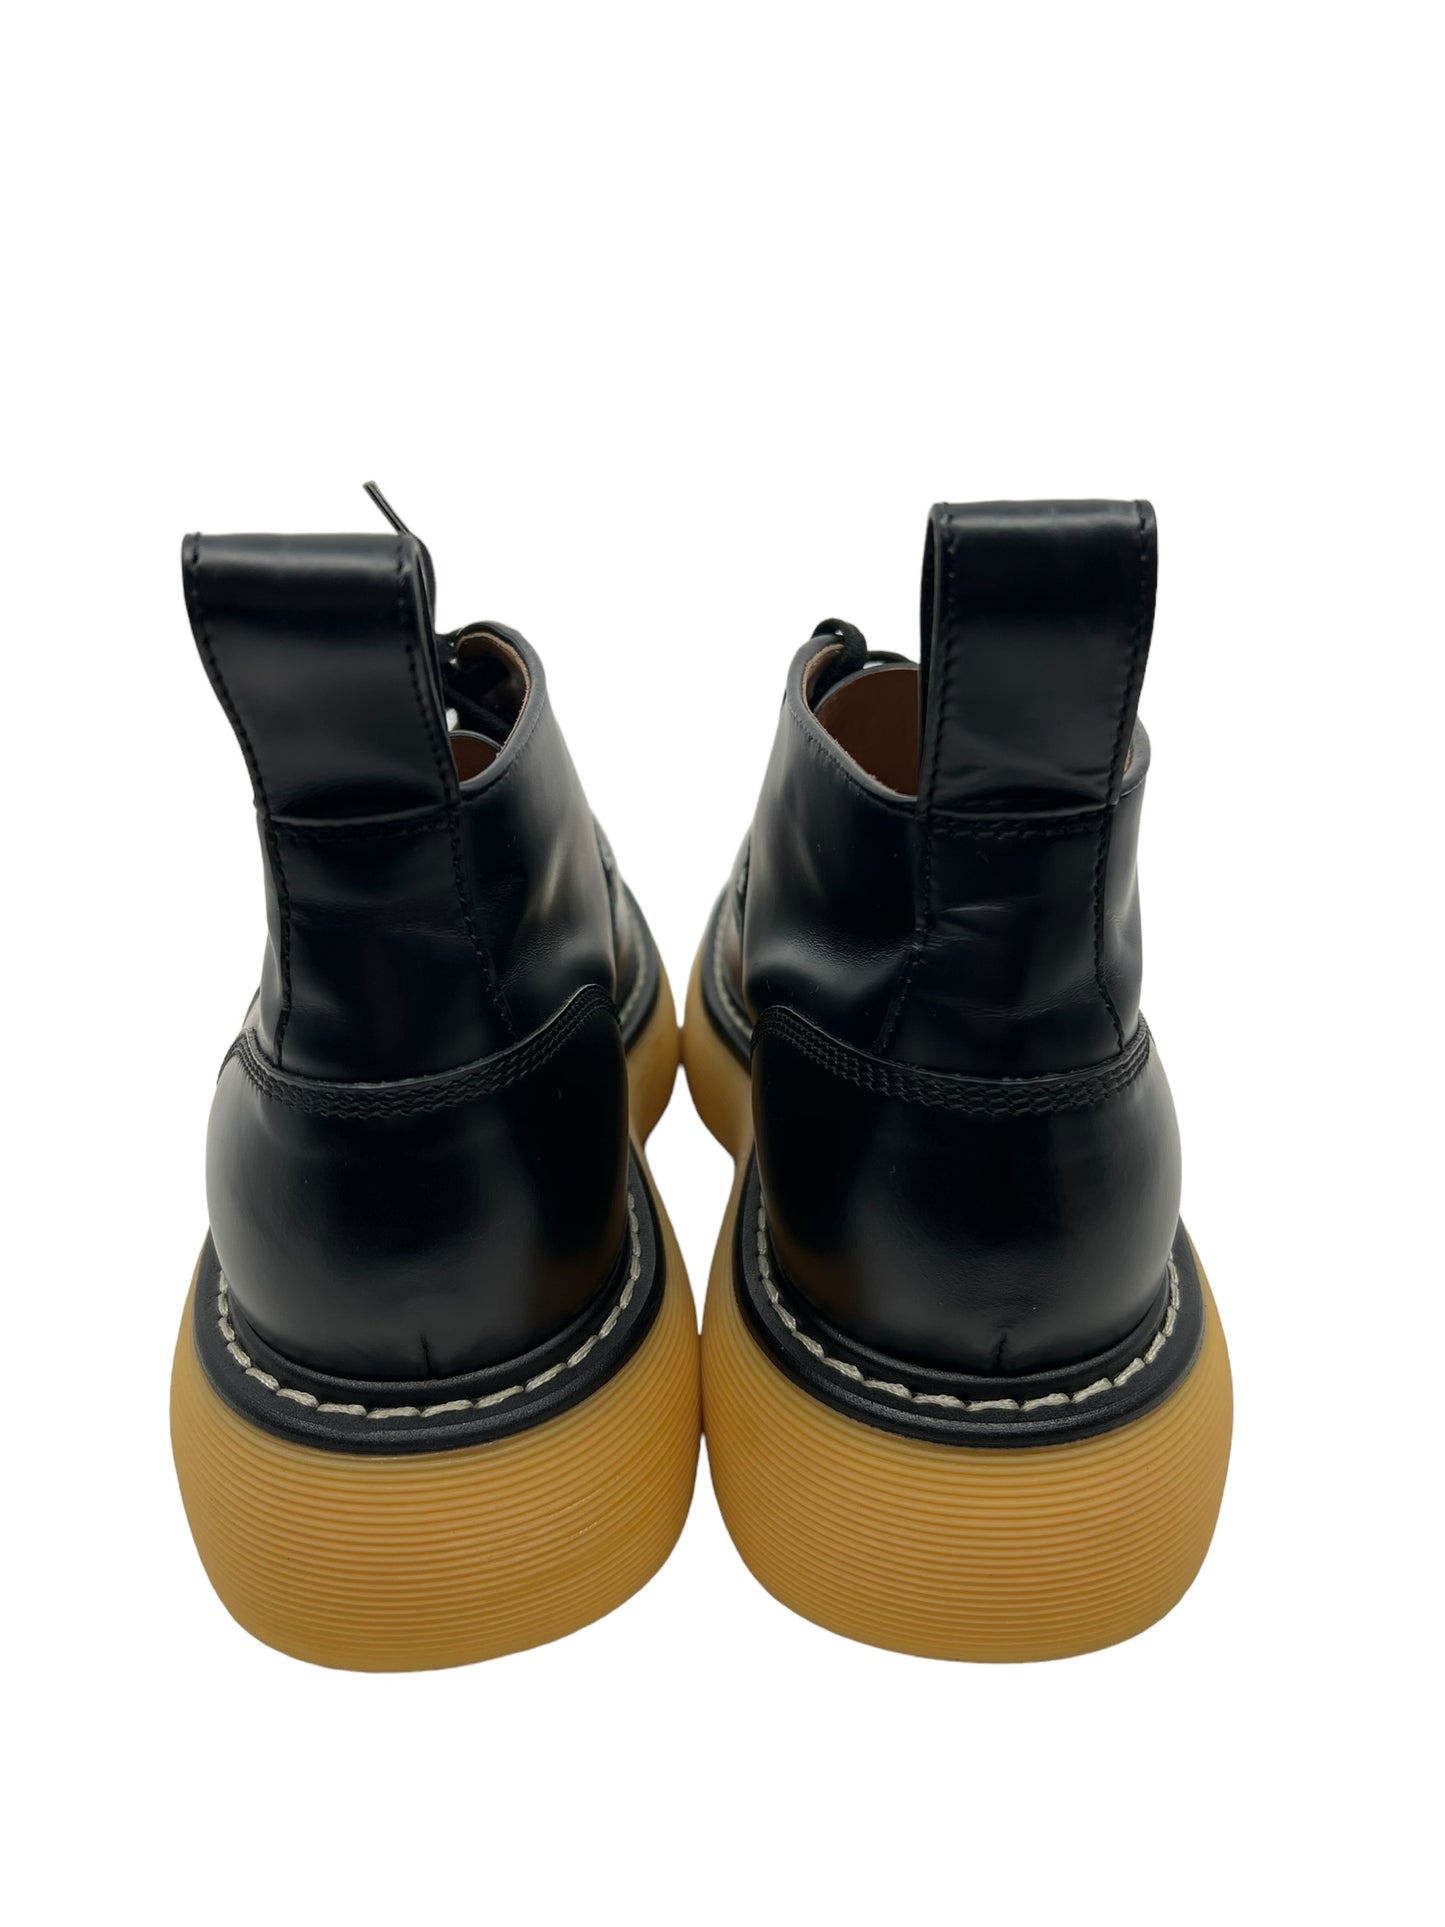 Bottega Venetta Bounce Boots pre-owned size 45